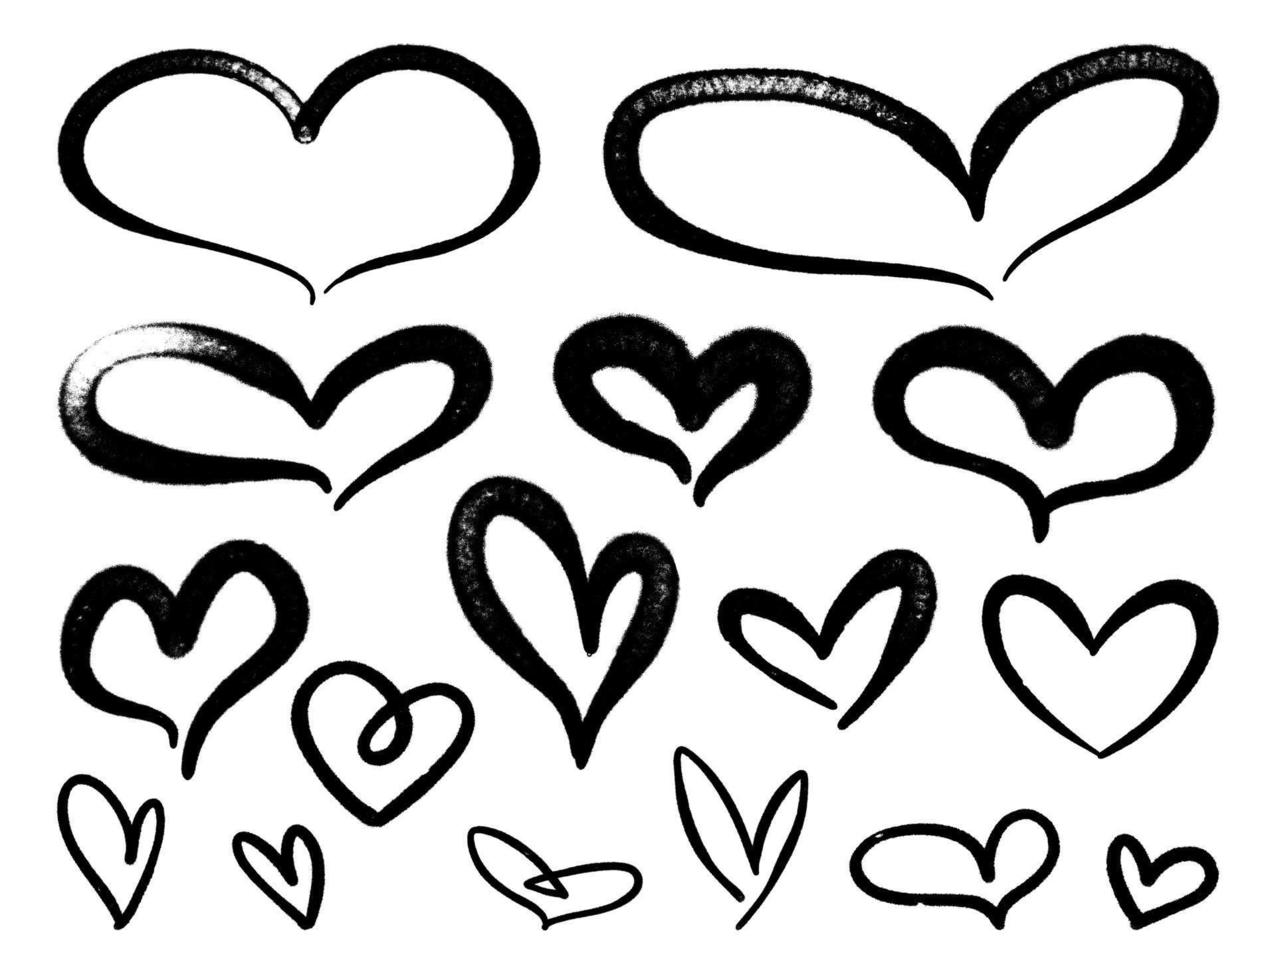 heart icon. graffiti style spray design element set vector